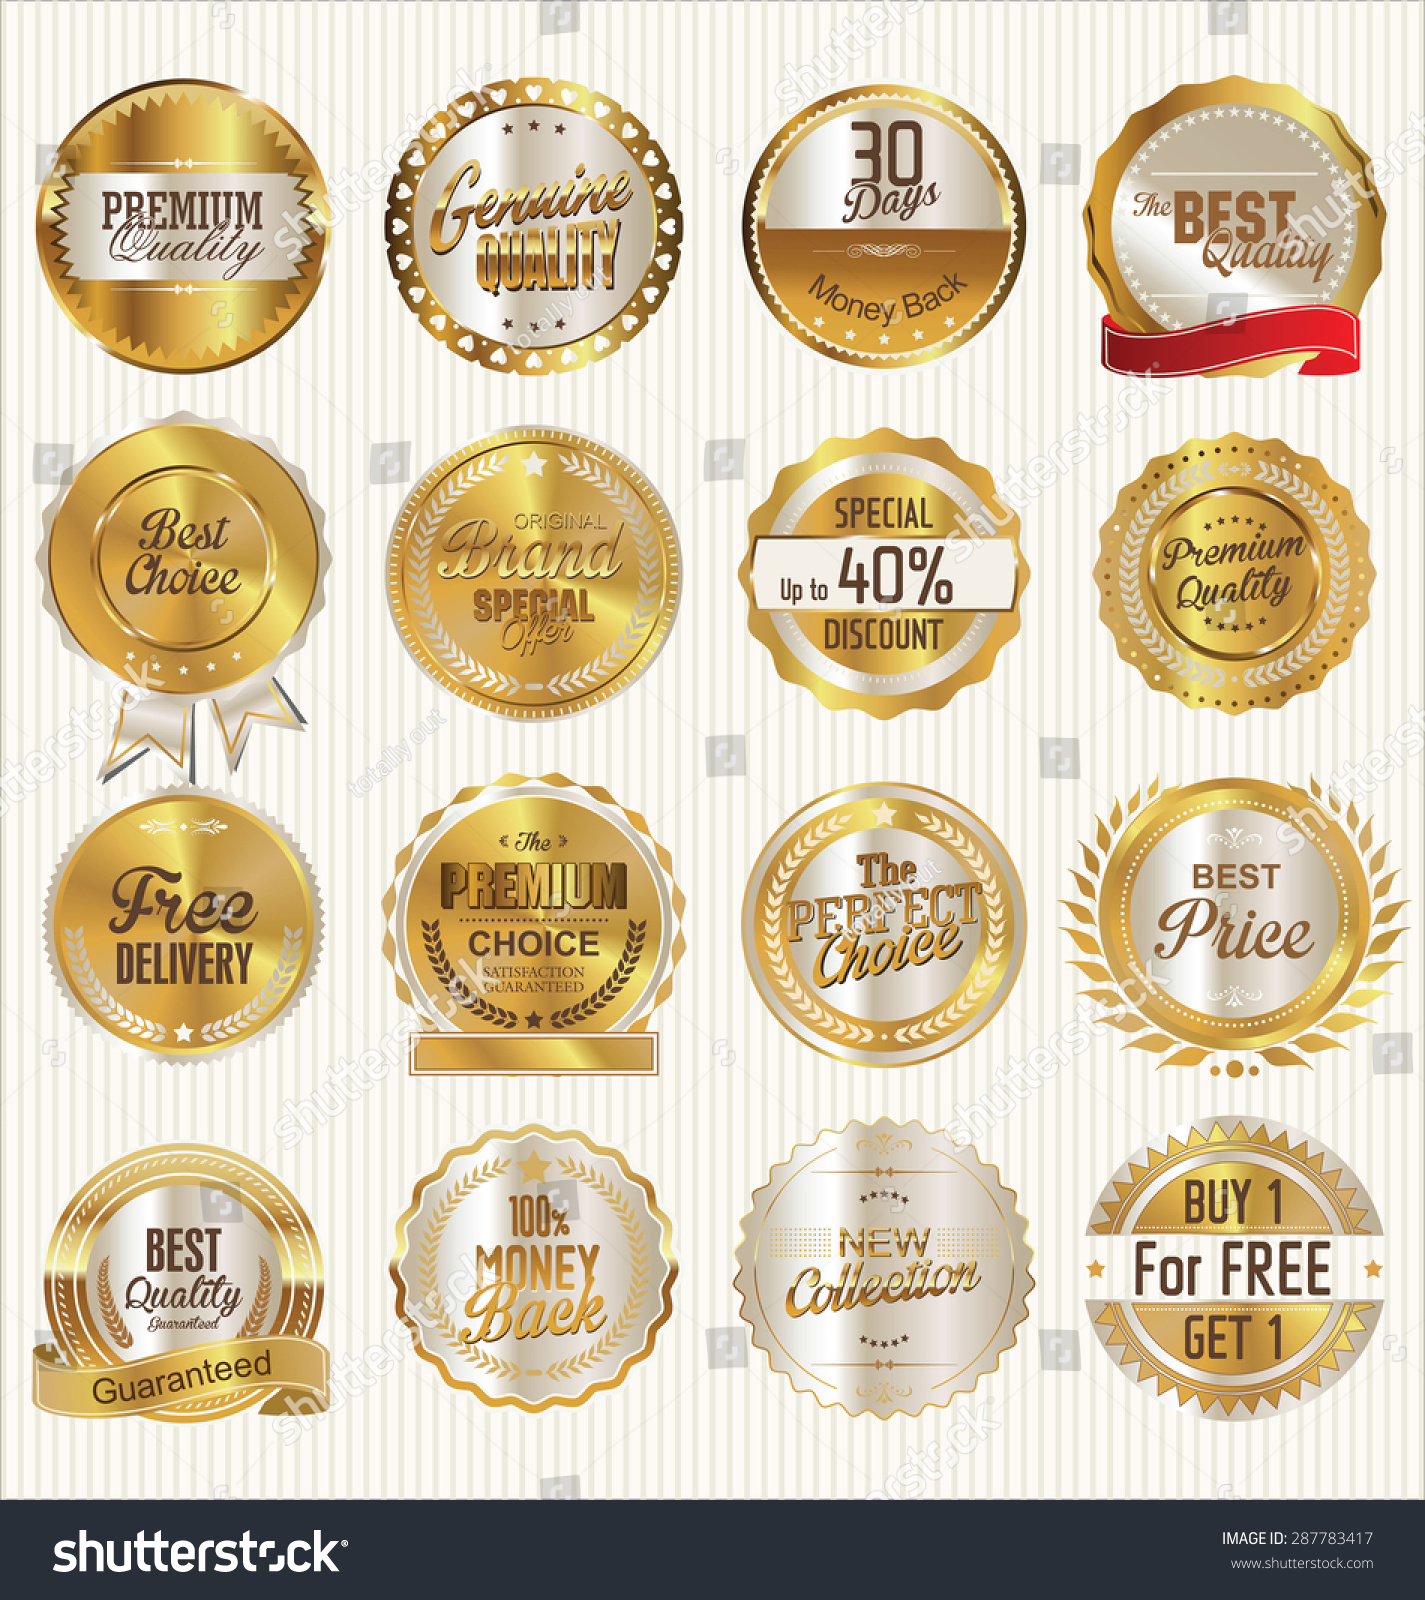 Golden Labels Collection Stock Vector Illustration 287783417 : Shutterstock